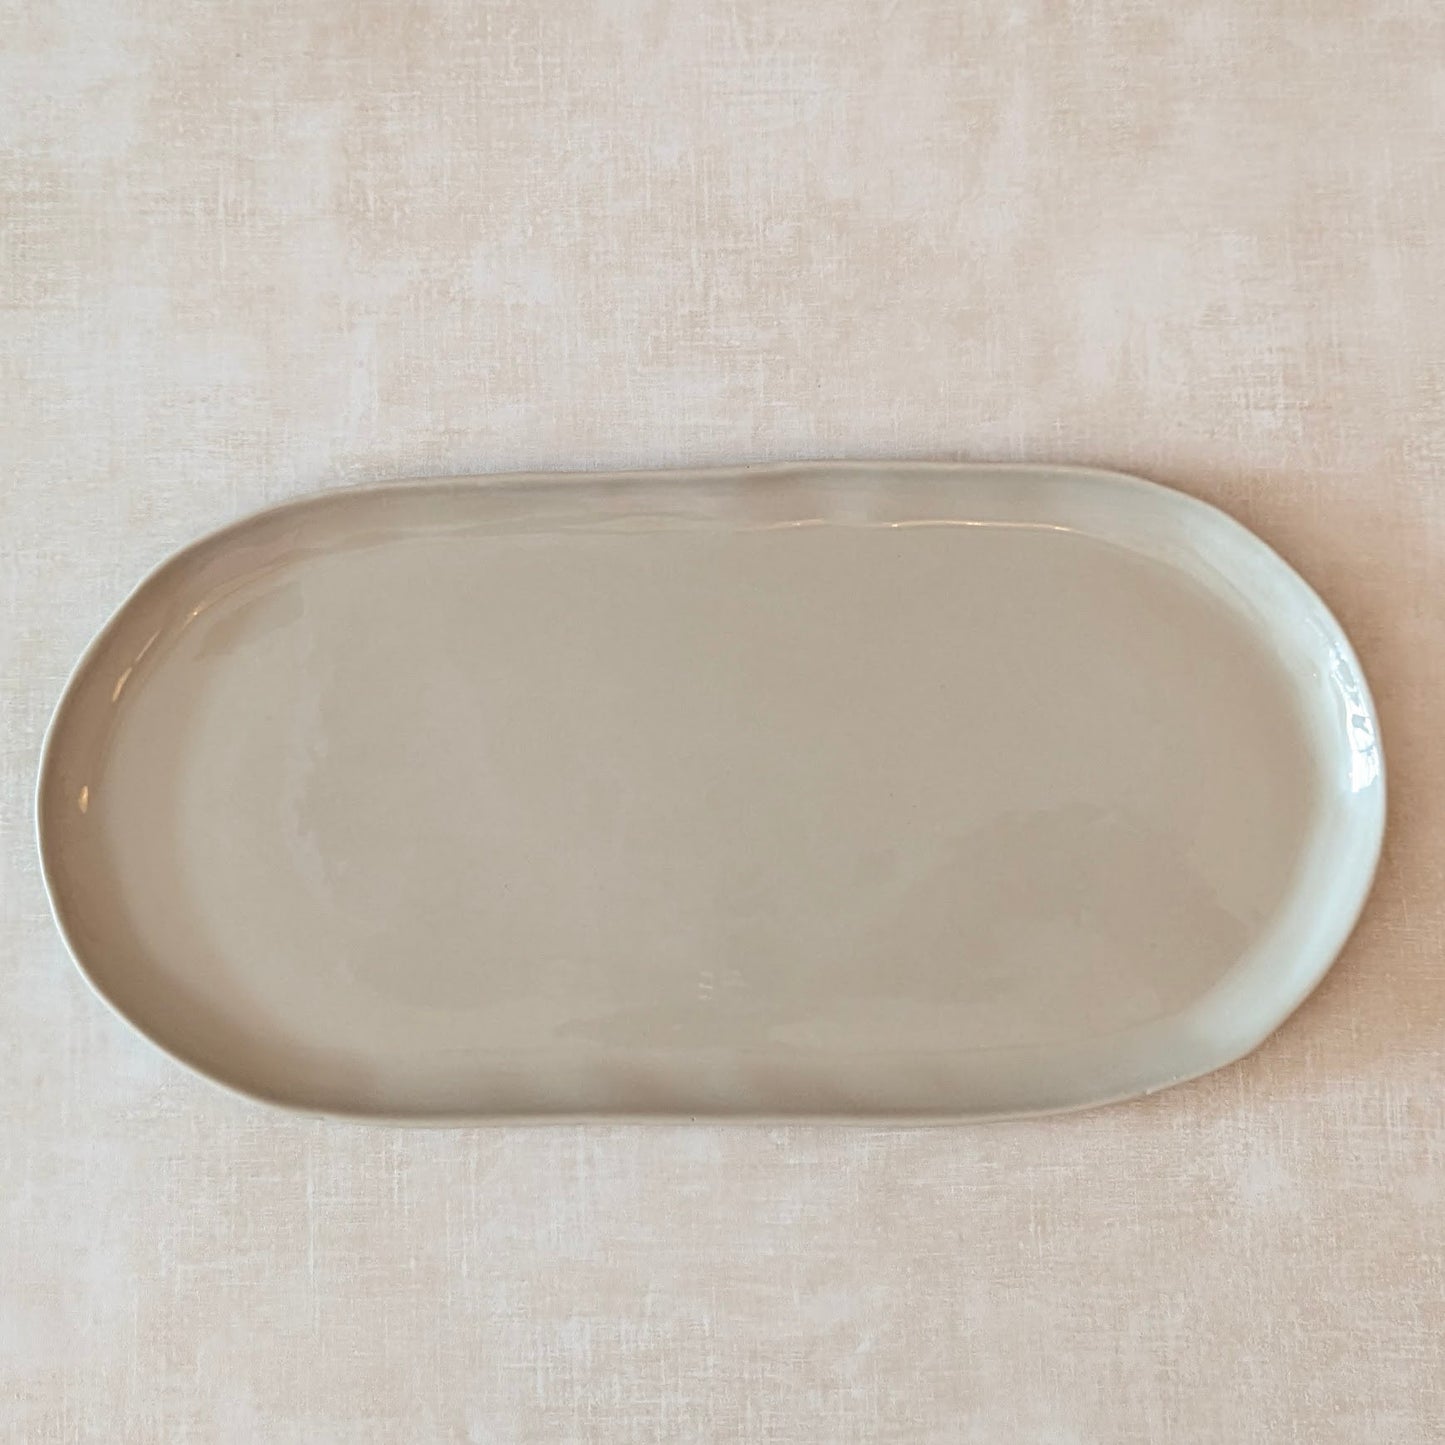 Organic Shaped Oval Platter